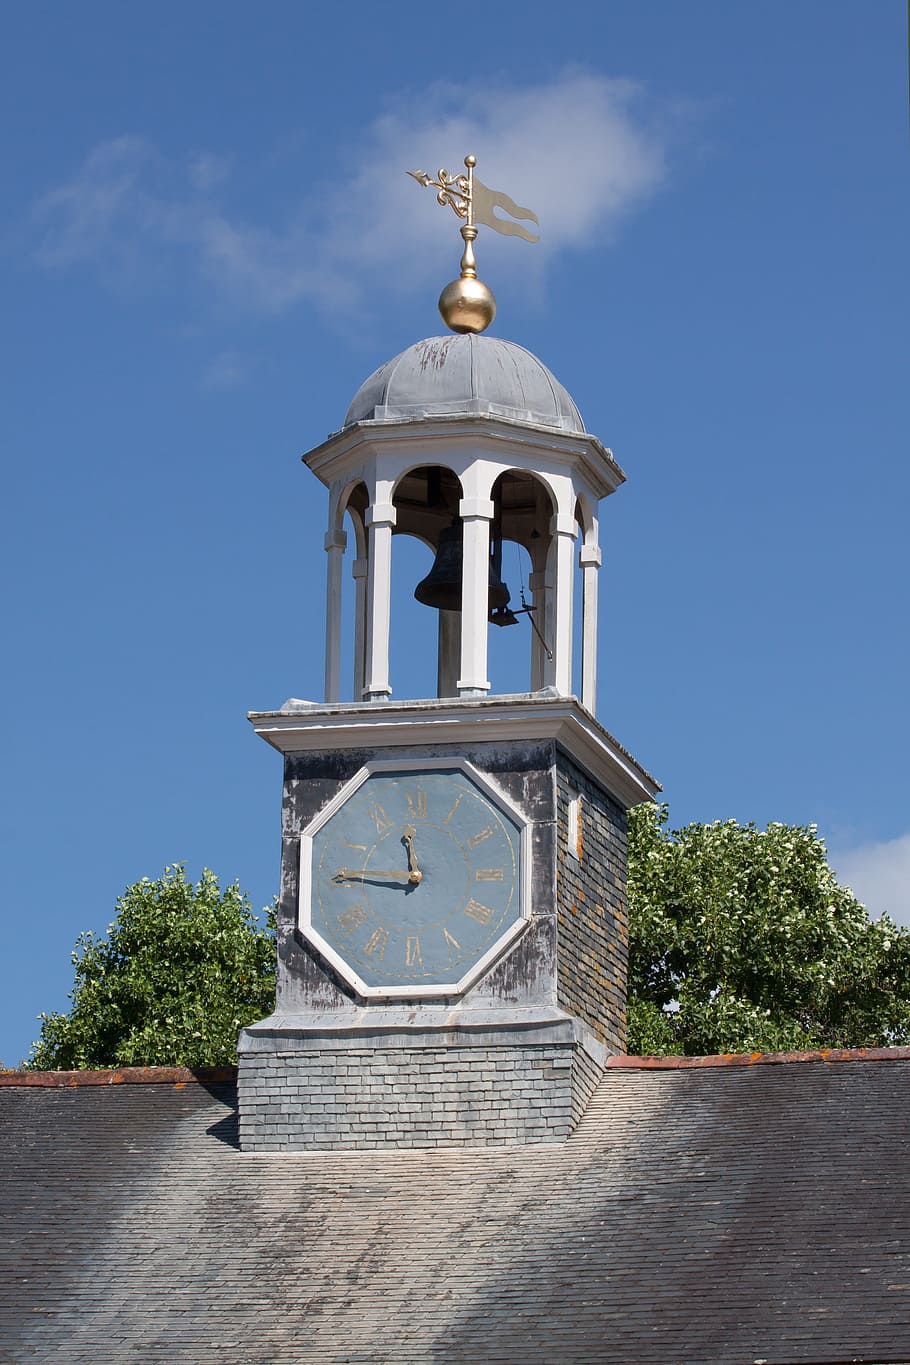 Turret, Columnar, Clock, about, octagonal, pointer, gold, roman numerals, HD wallpaper